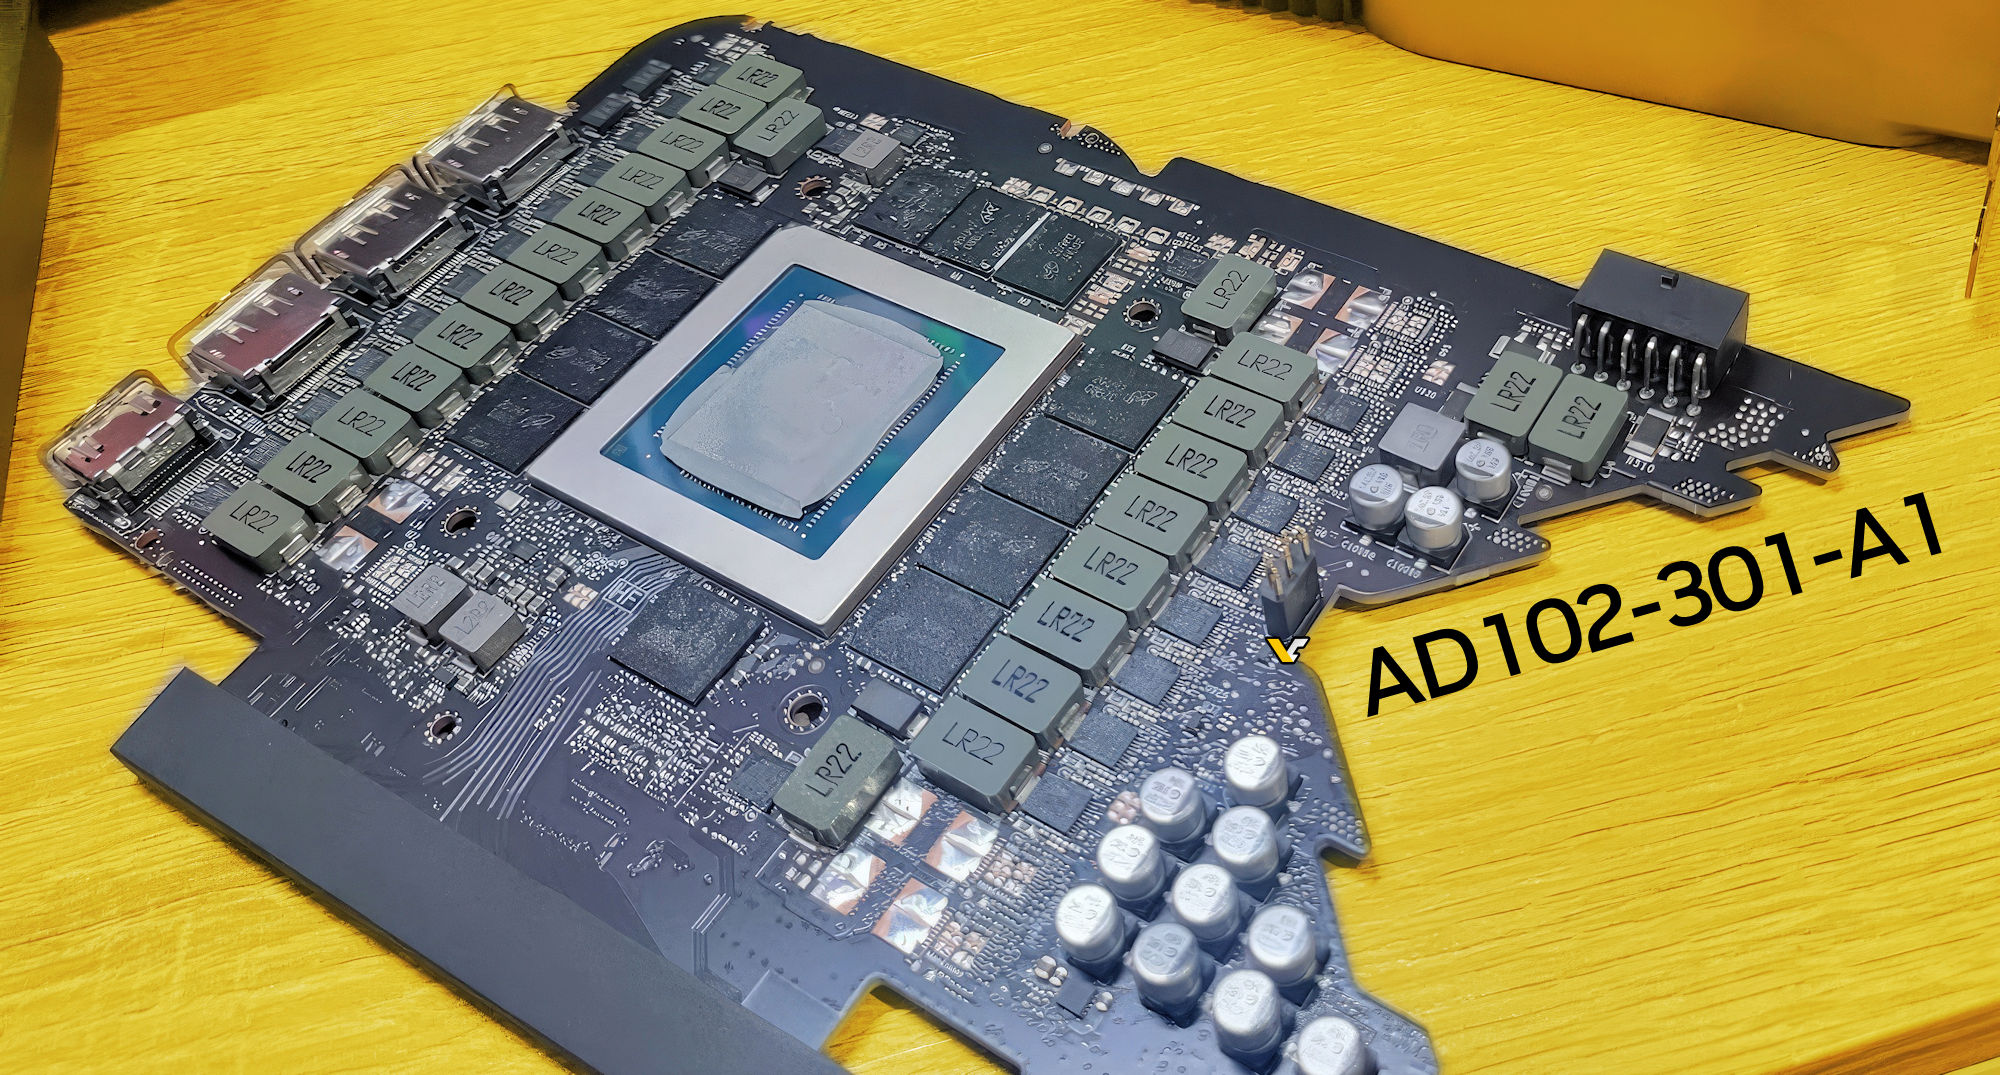 Lenovo Develops Mini-ITX Form-Factor GeForce RTX 4060